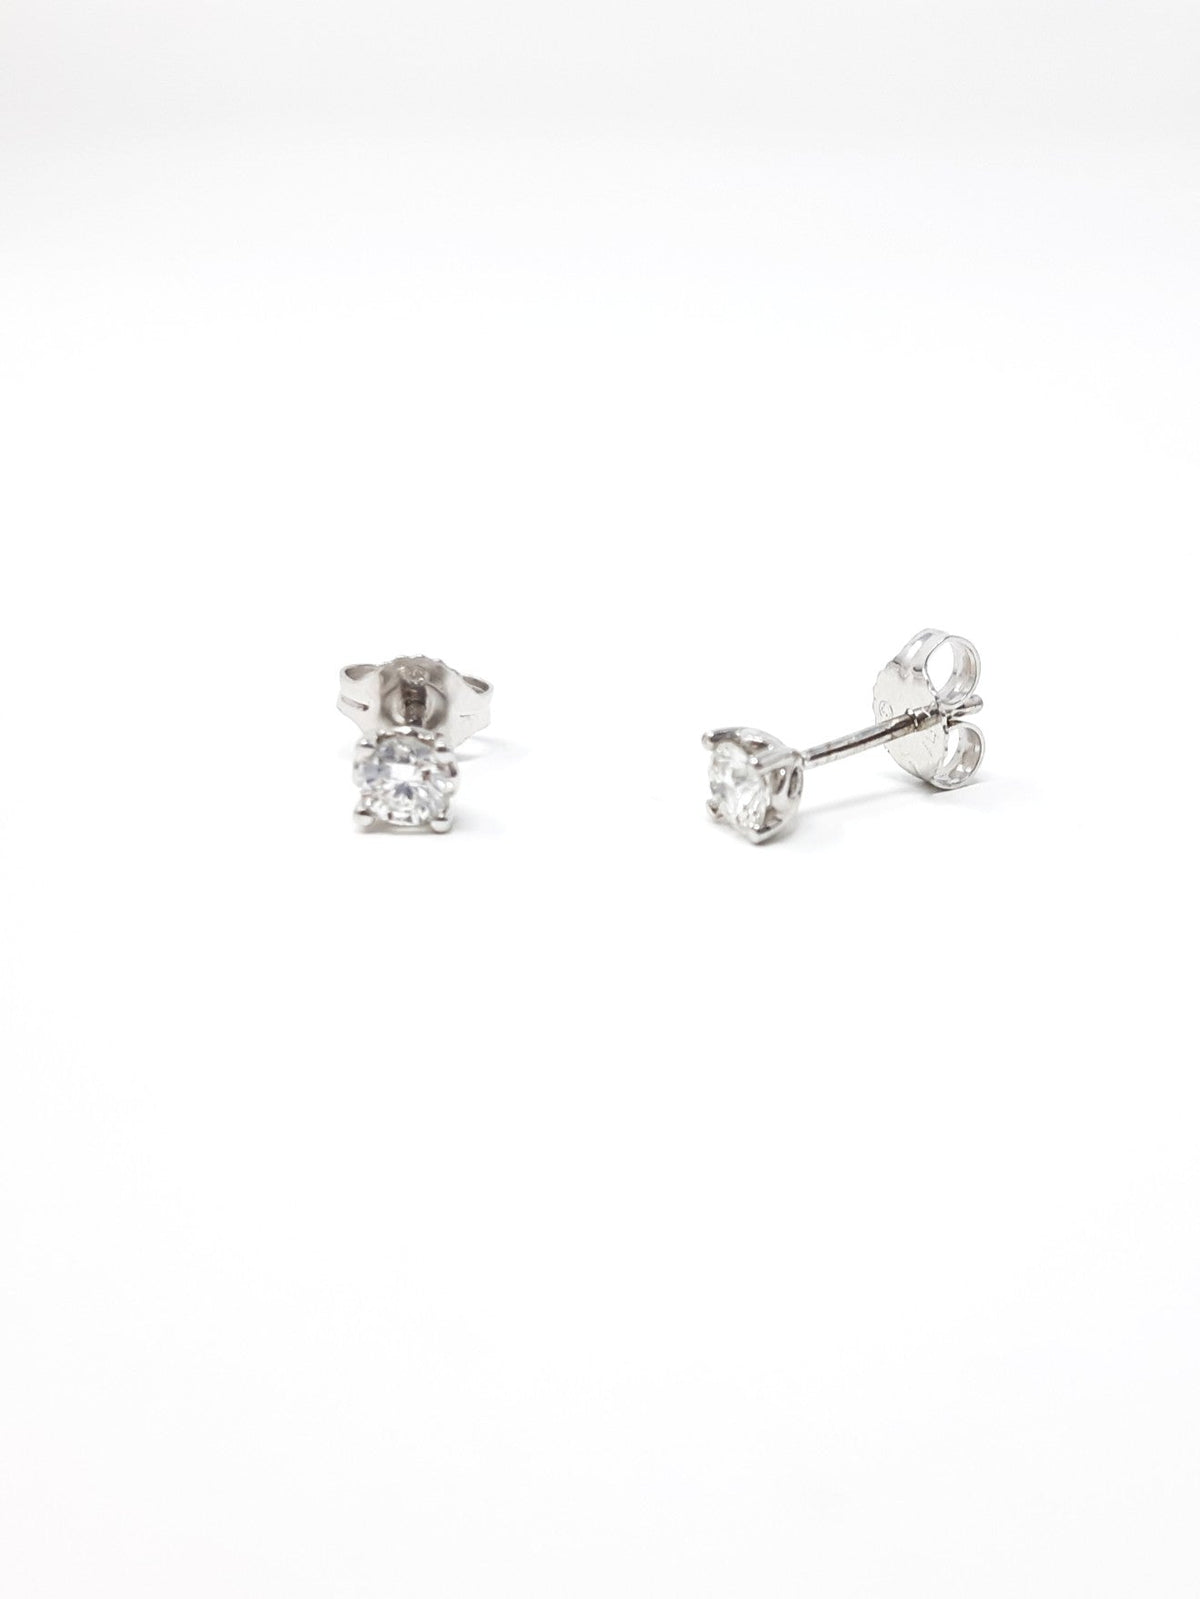 14K White Gold 0.15cttw Round Cut Canadian Diamond Stud Earrings